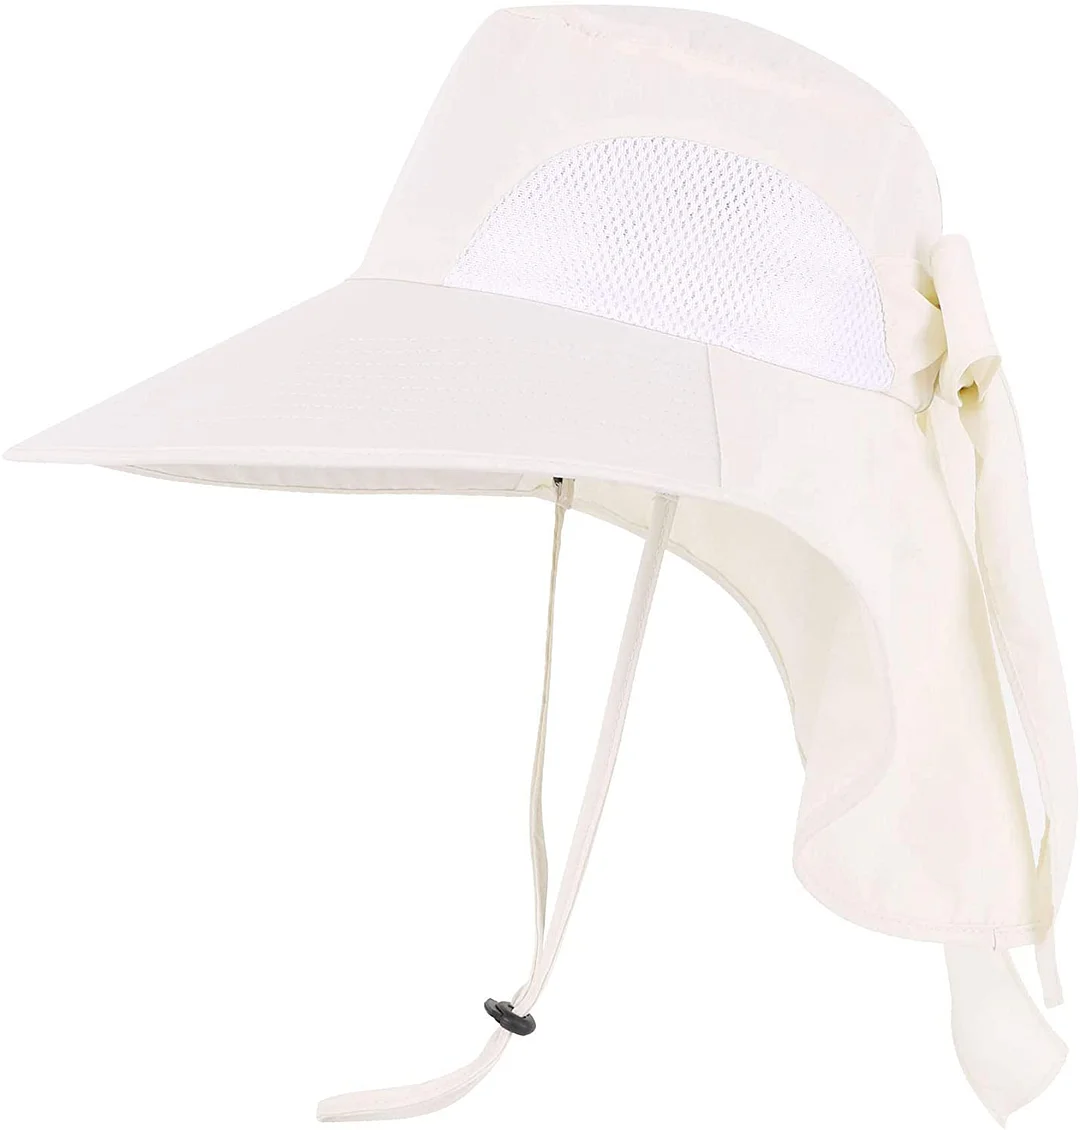 Men/Womens Foldable Flap Cover UPF 50+ UV Protective Wide Brim Bucket Sun Hat